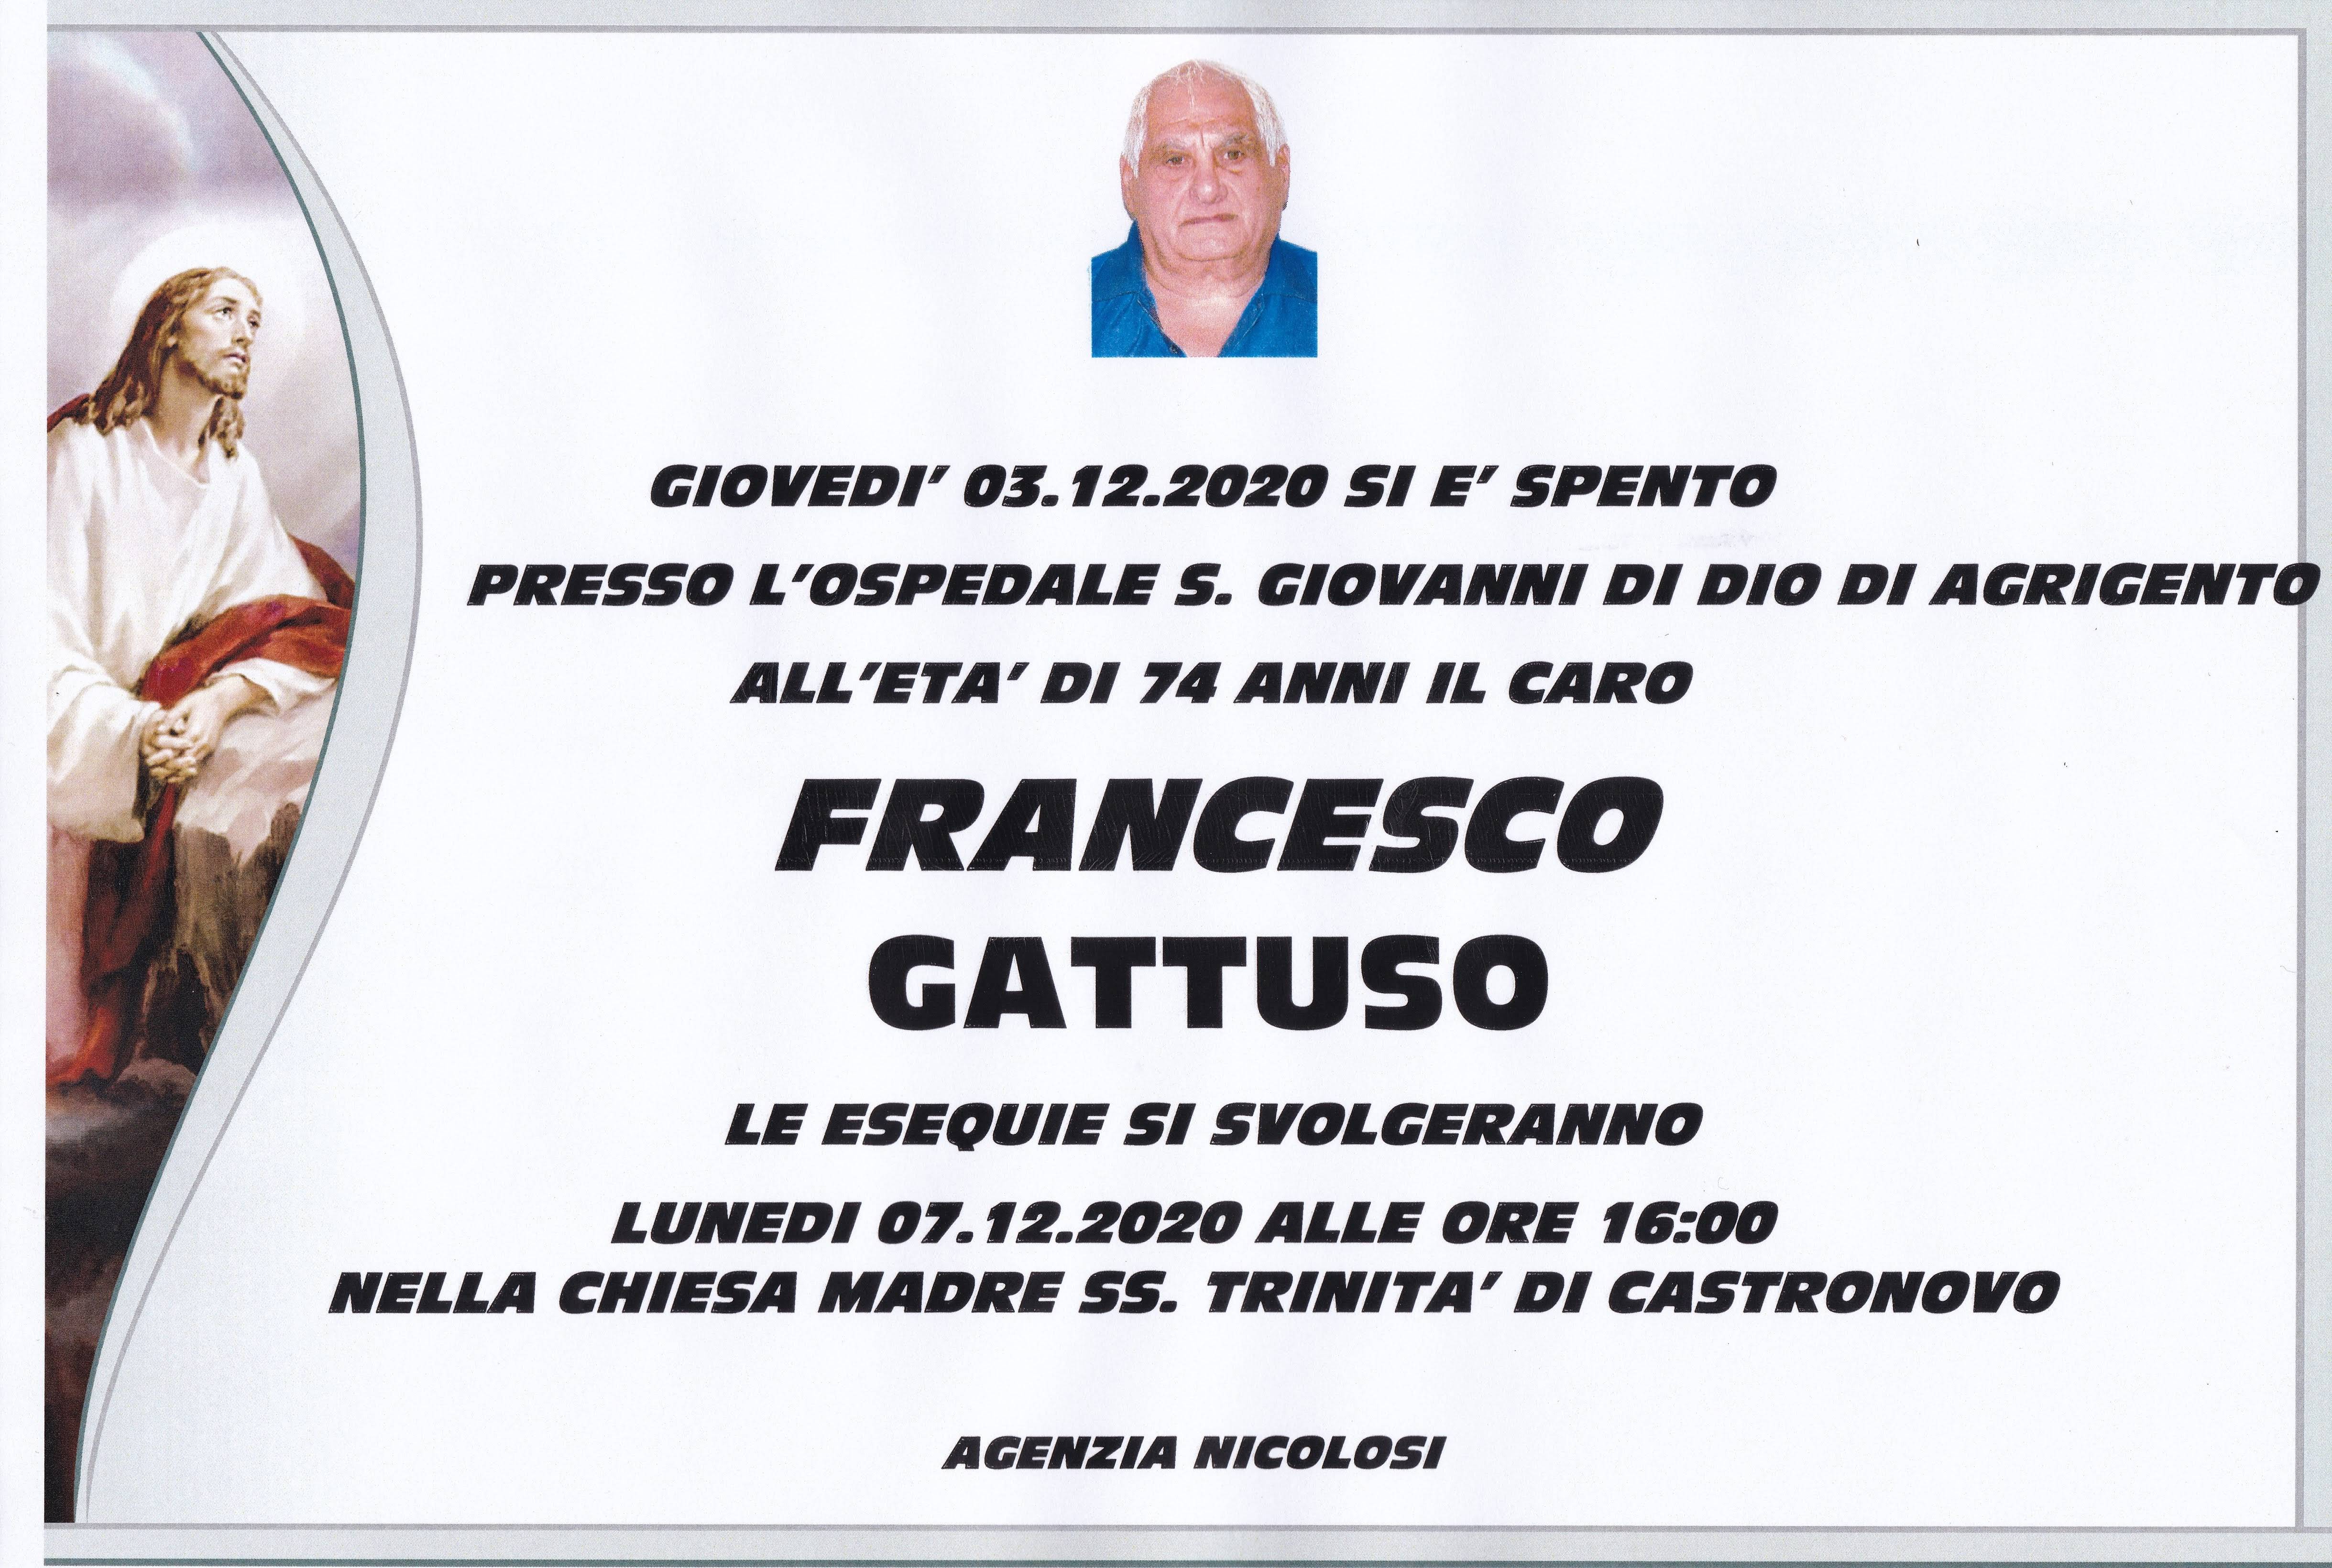 Francesco Gattuso